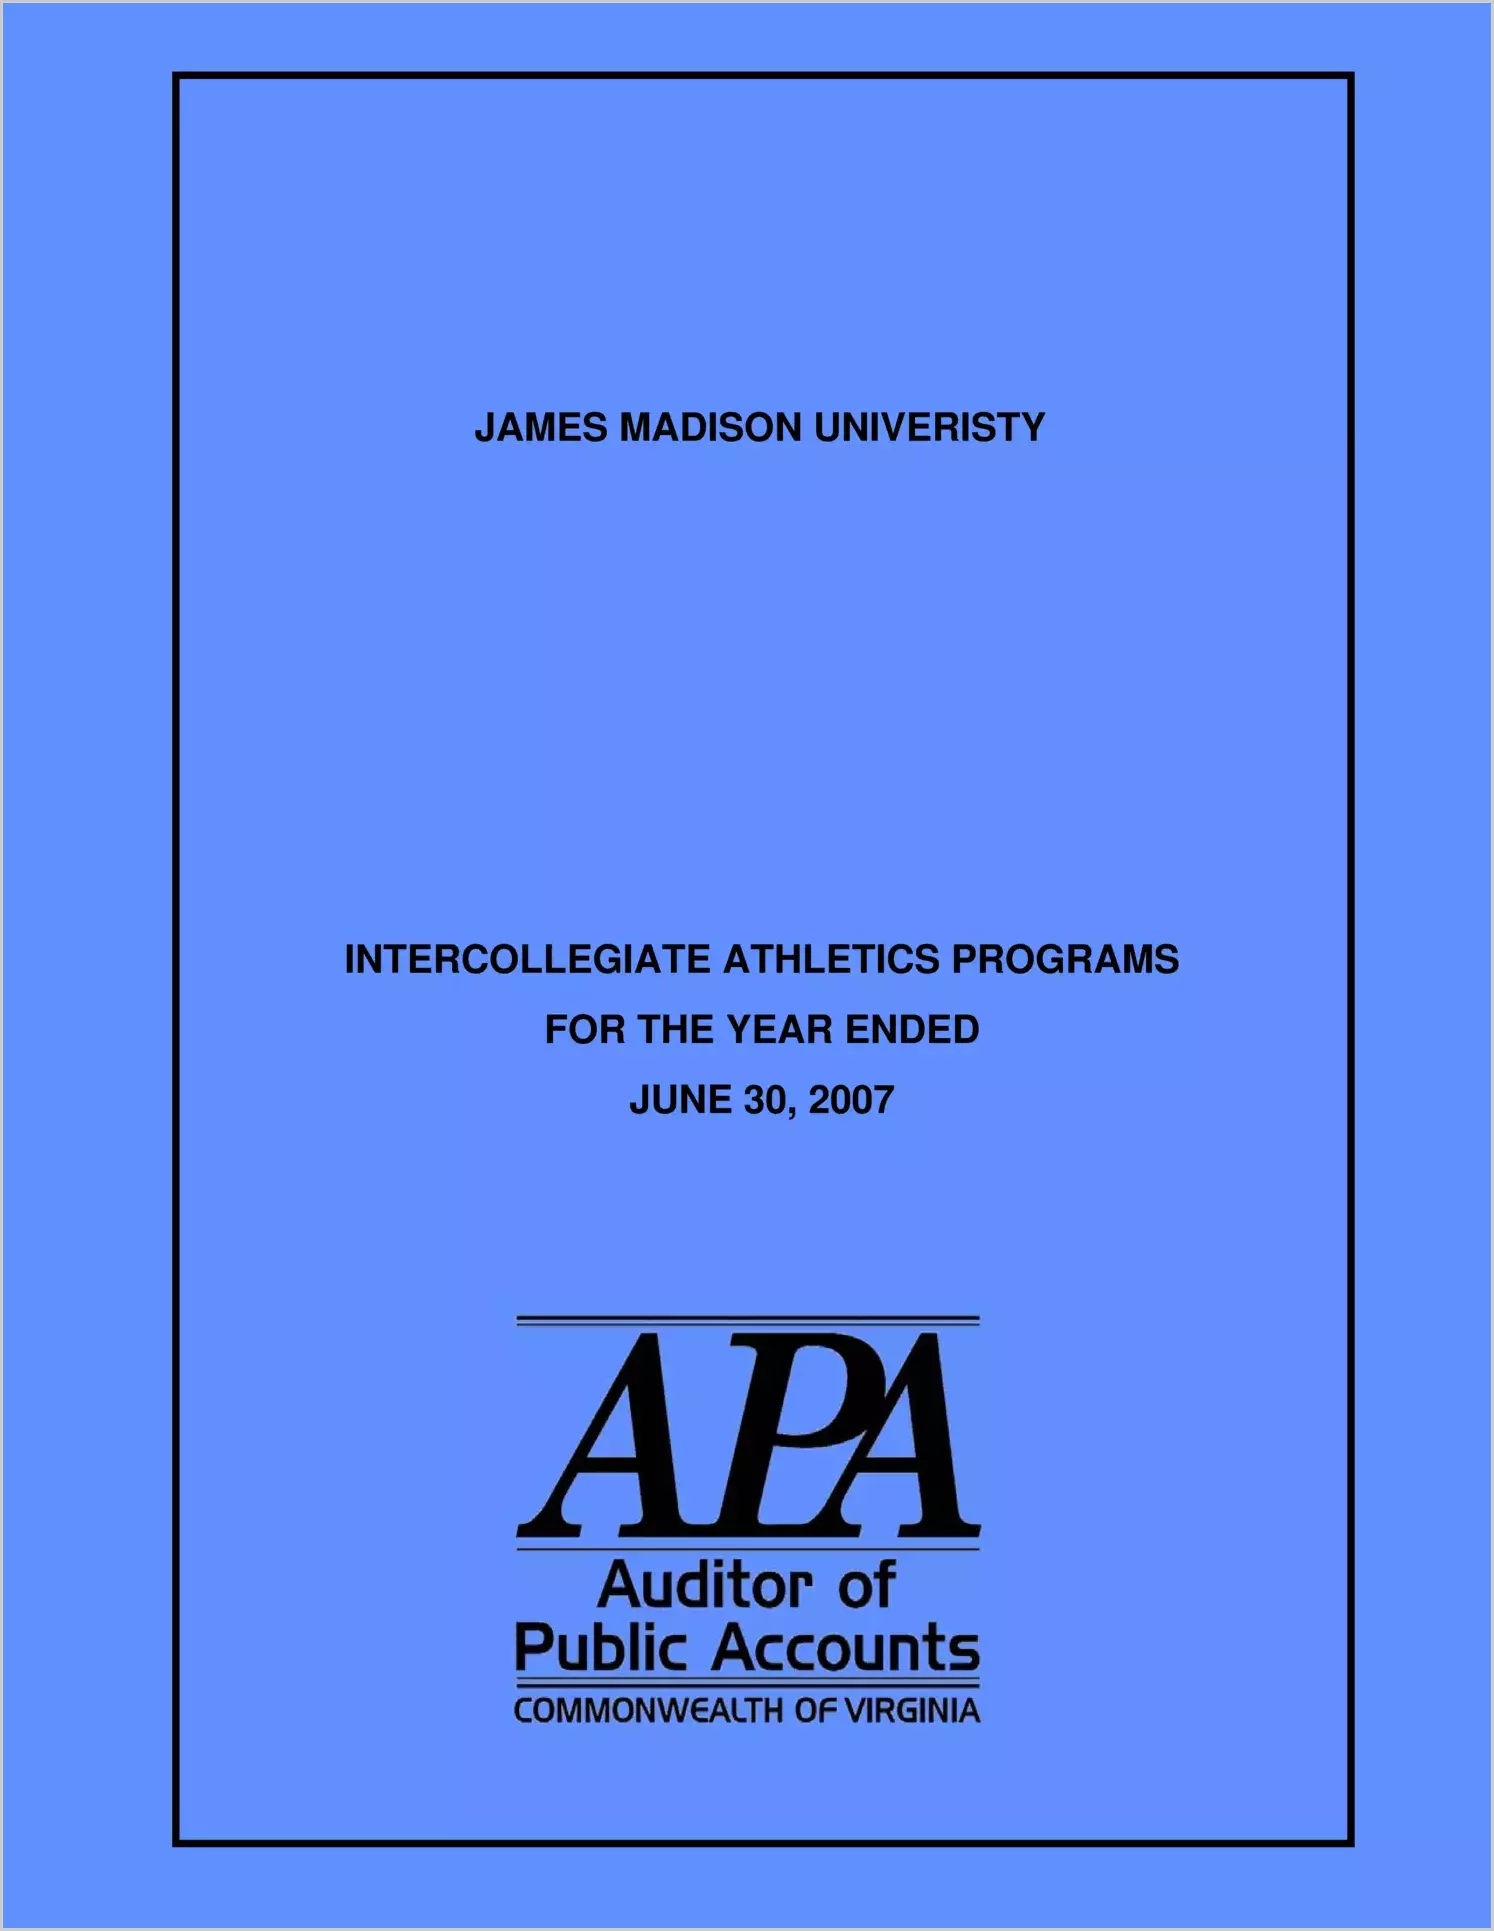 James Madison University Intercollegiate Athletics Programs for the year ended June 30, 2007